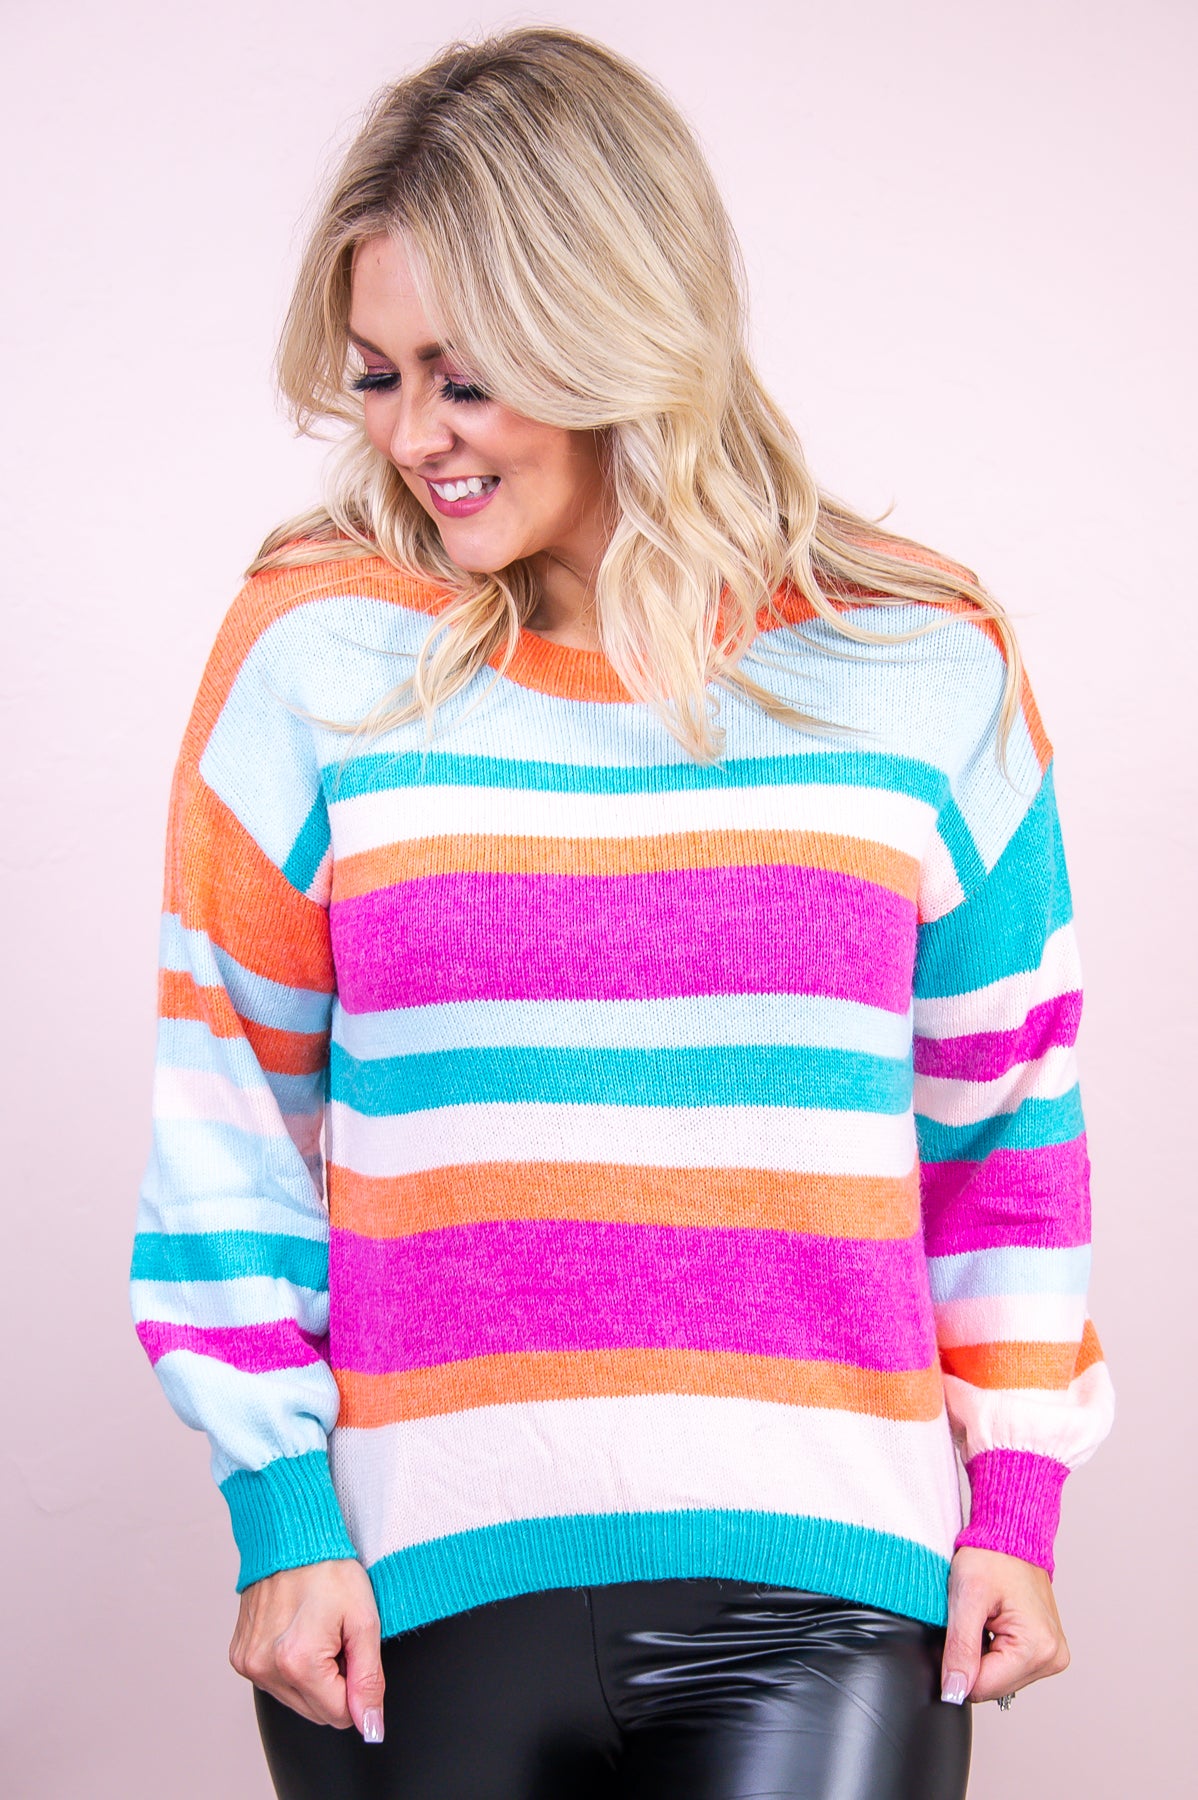 Effortless Comfort Orange/Multi Color Striped Sweater Top - T8082OR